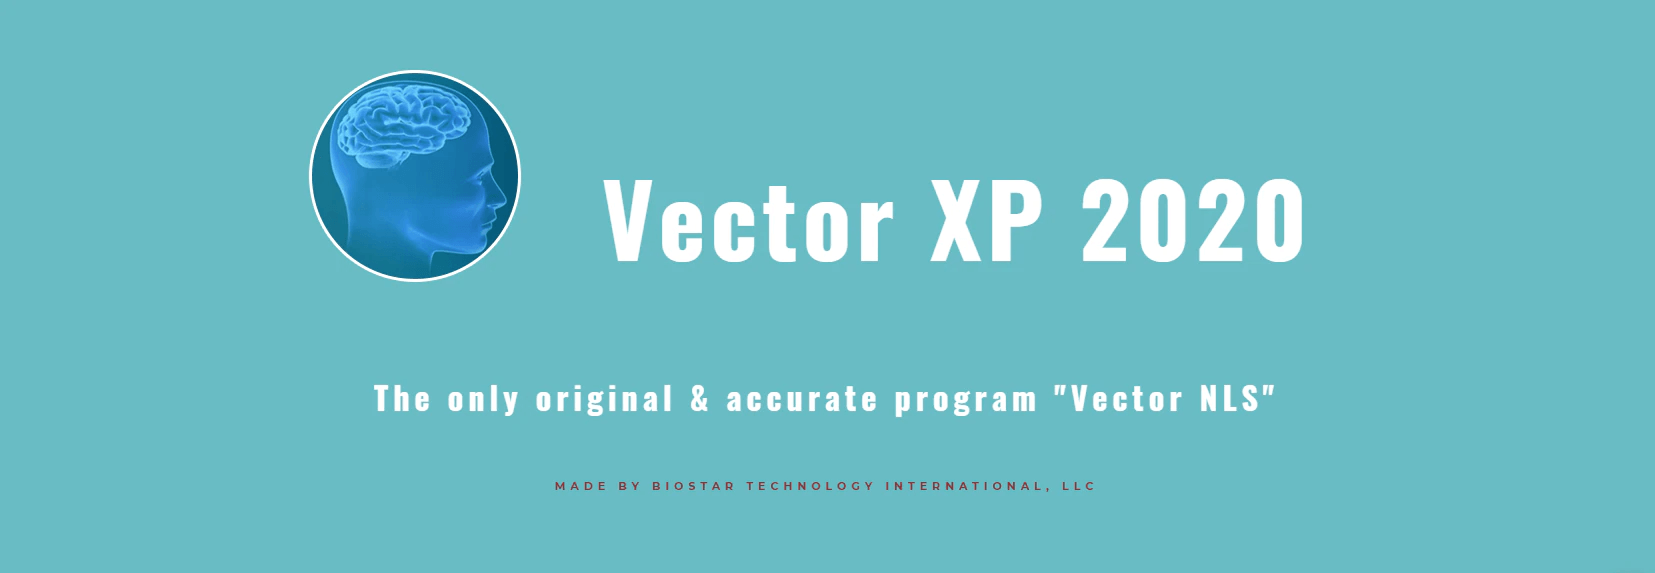 2020-vector-xp.png